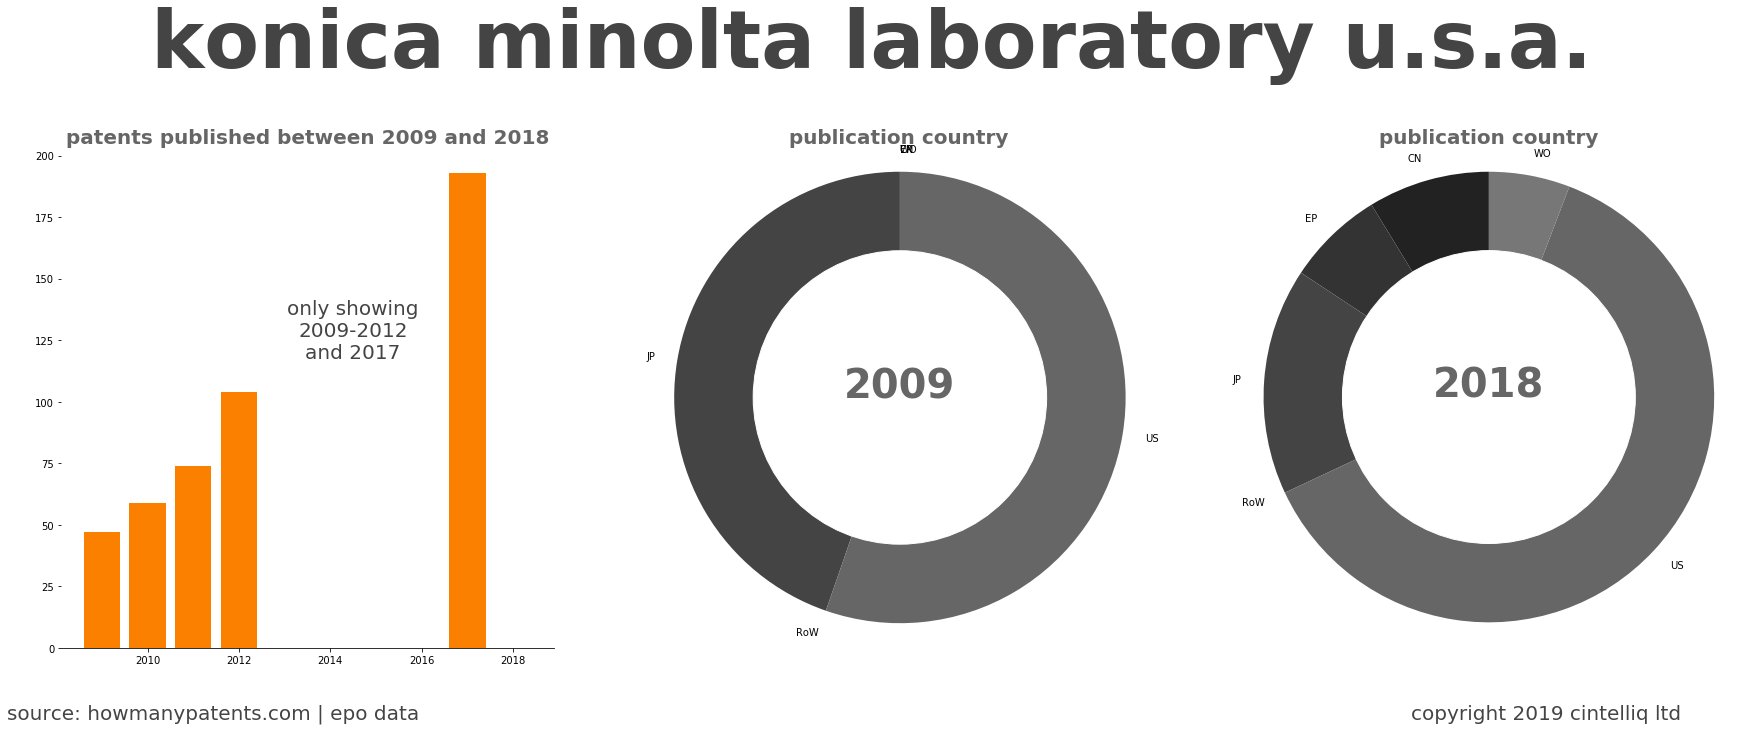 summary of patents for Konica Minolta Laboratory U.S.A.